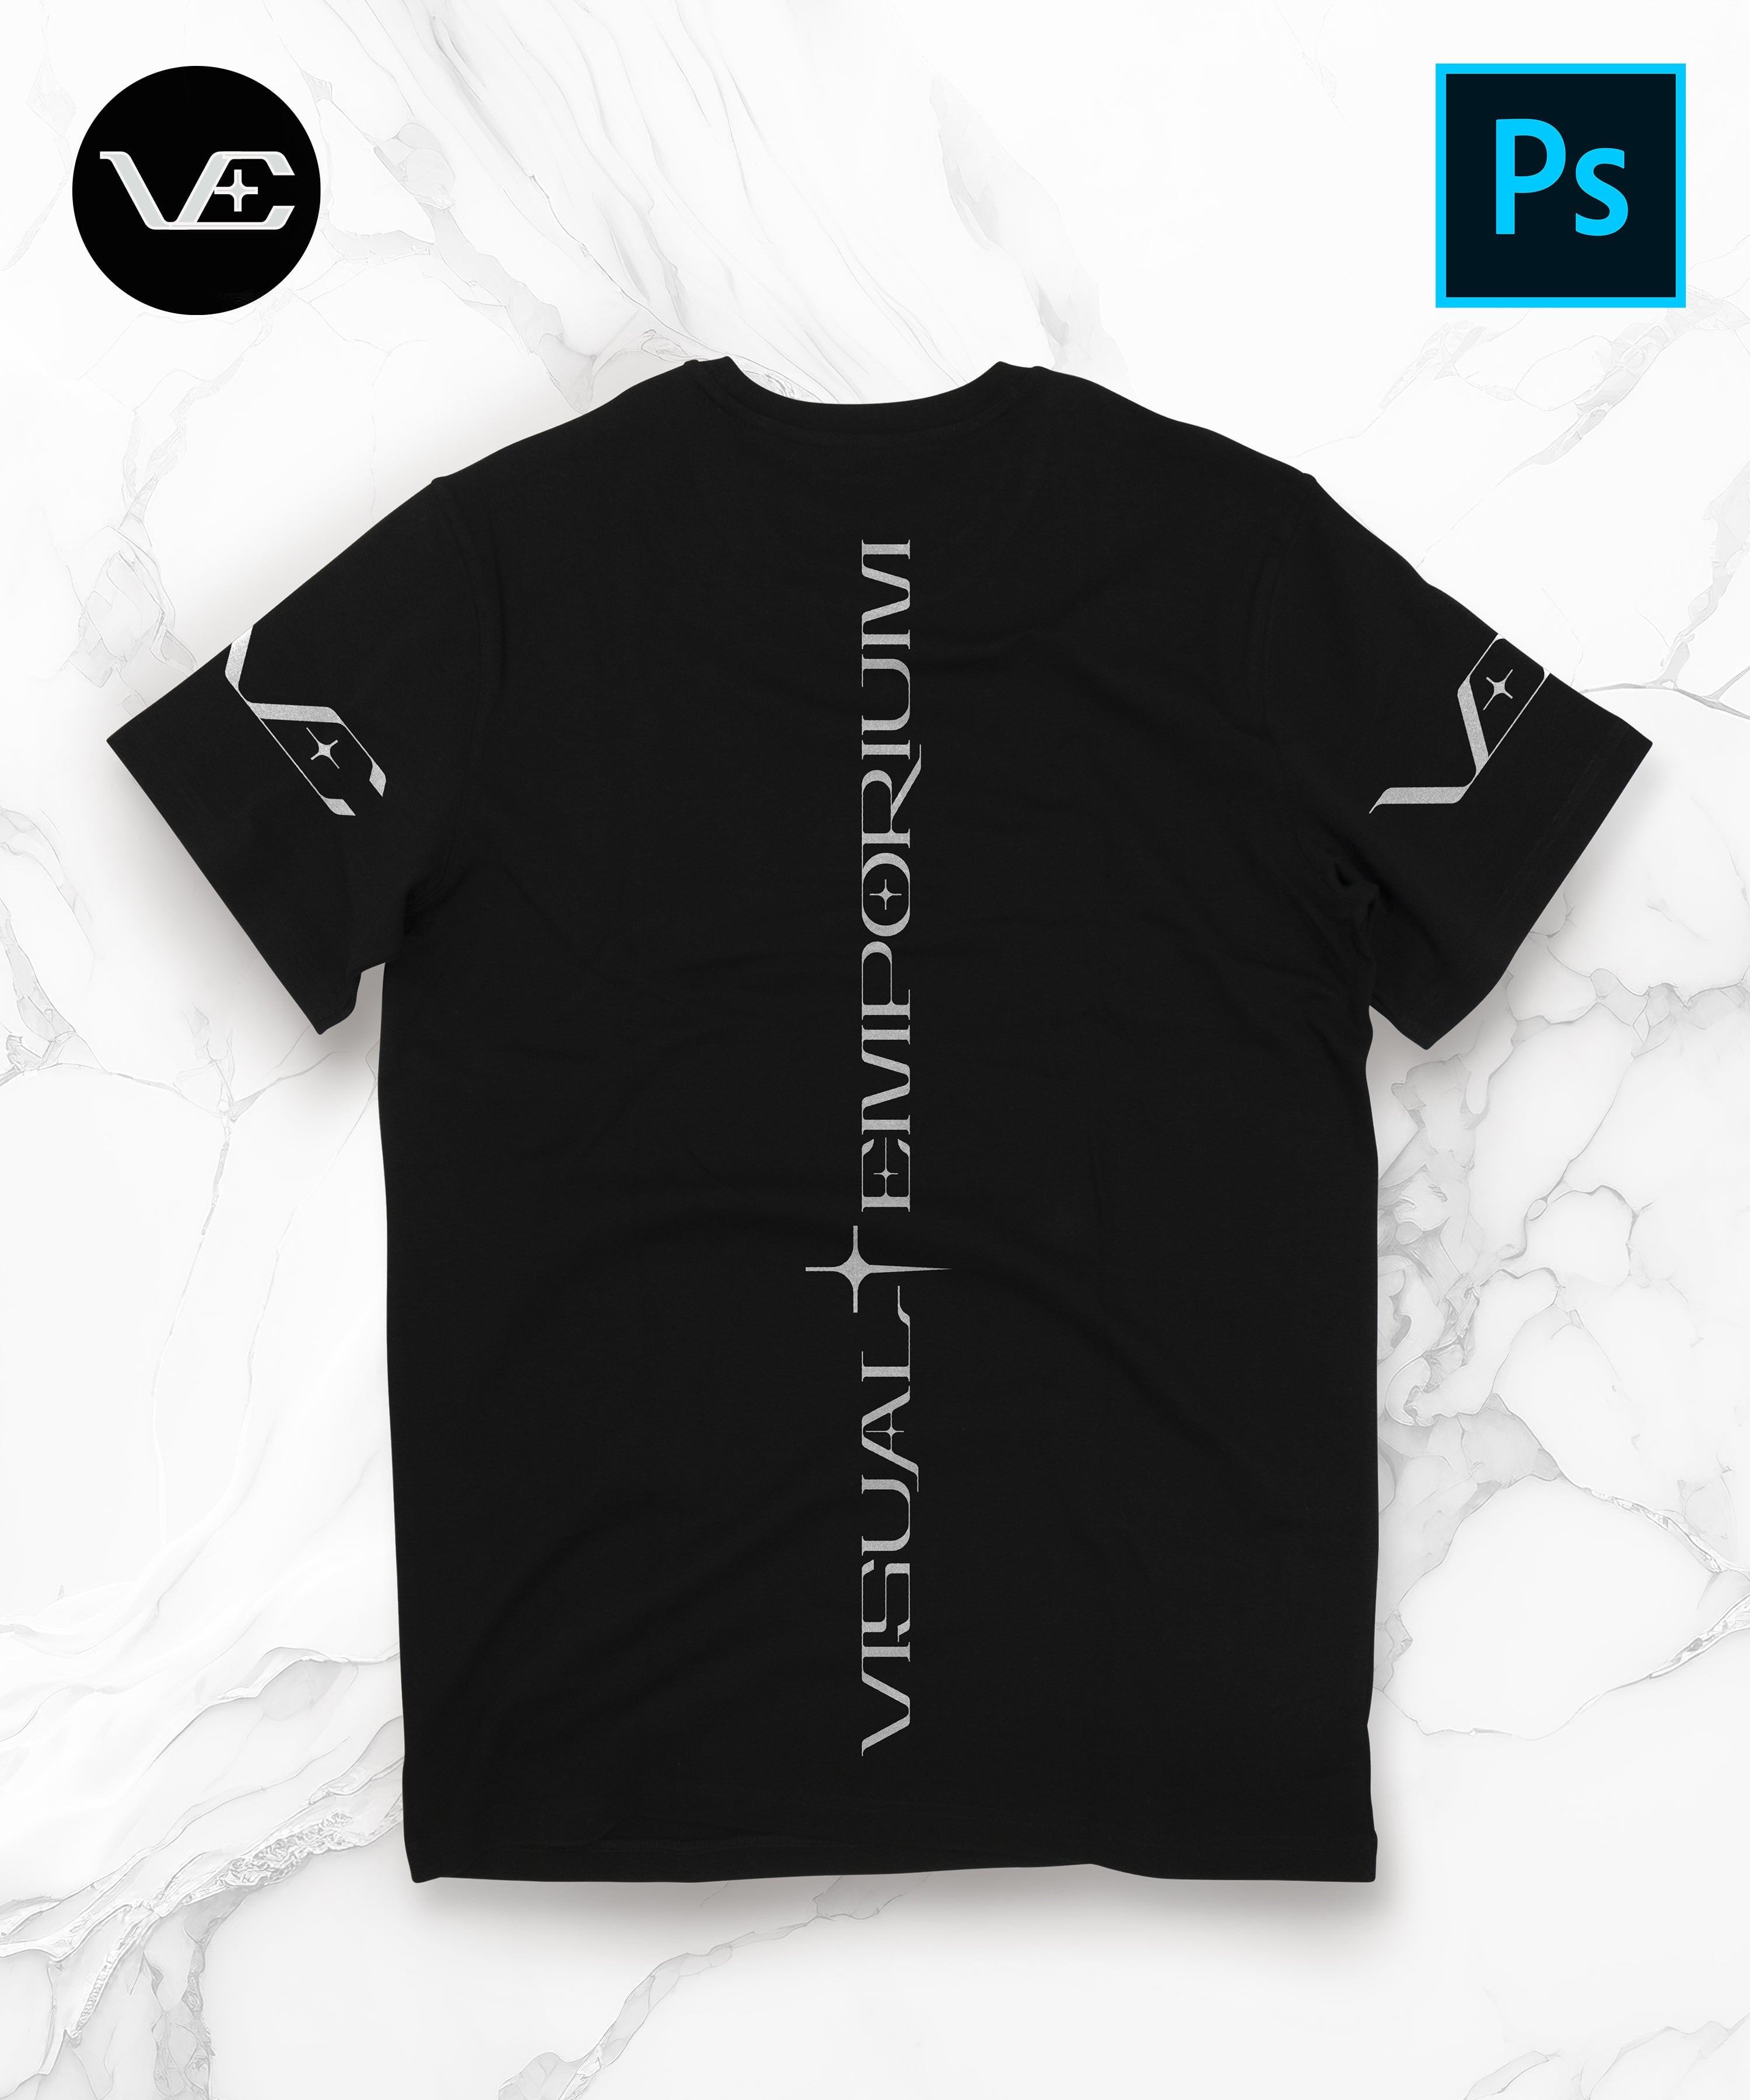 Visual Emporium - Flat T-Shirt - Premium Digital Mockup 